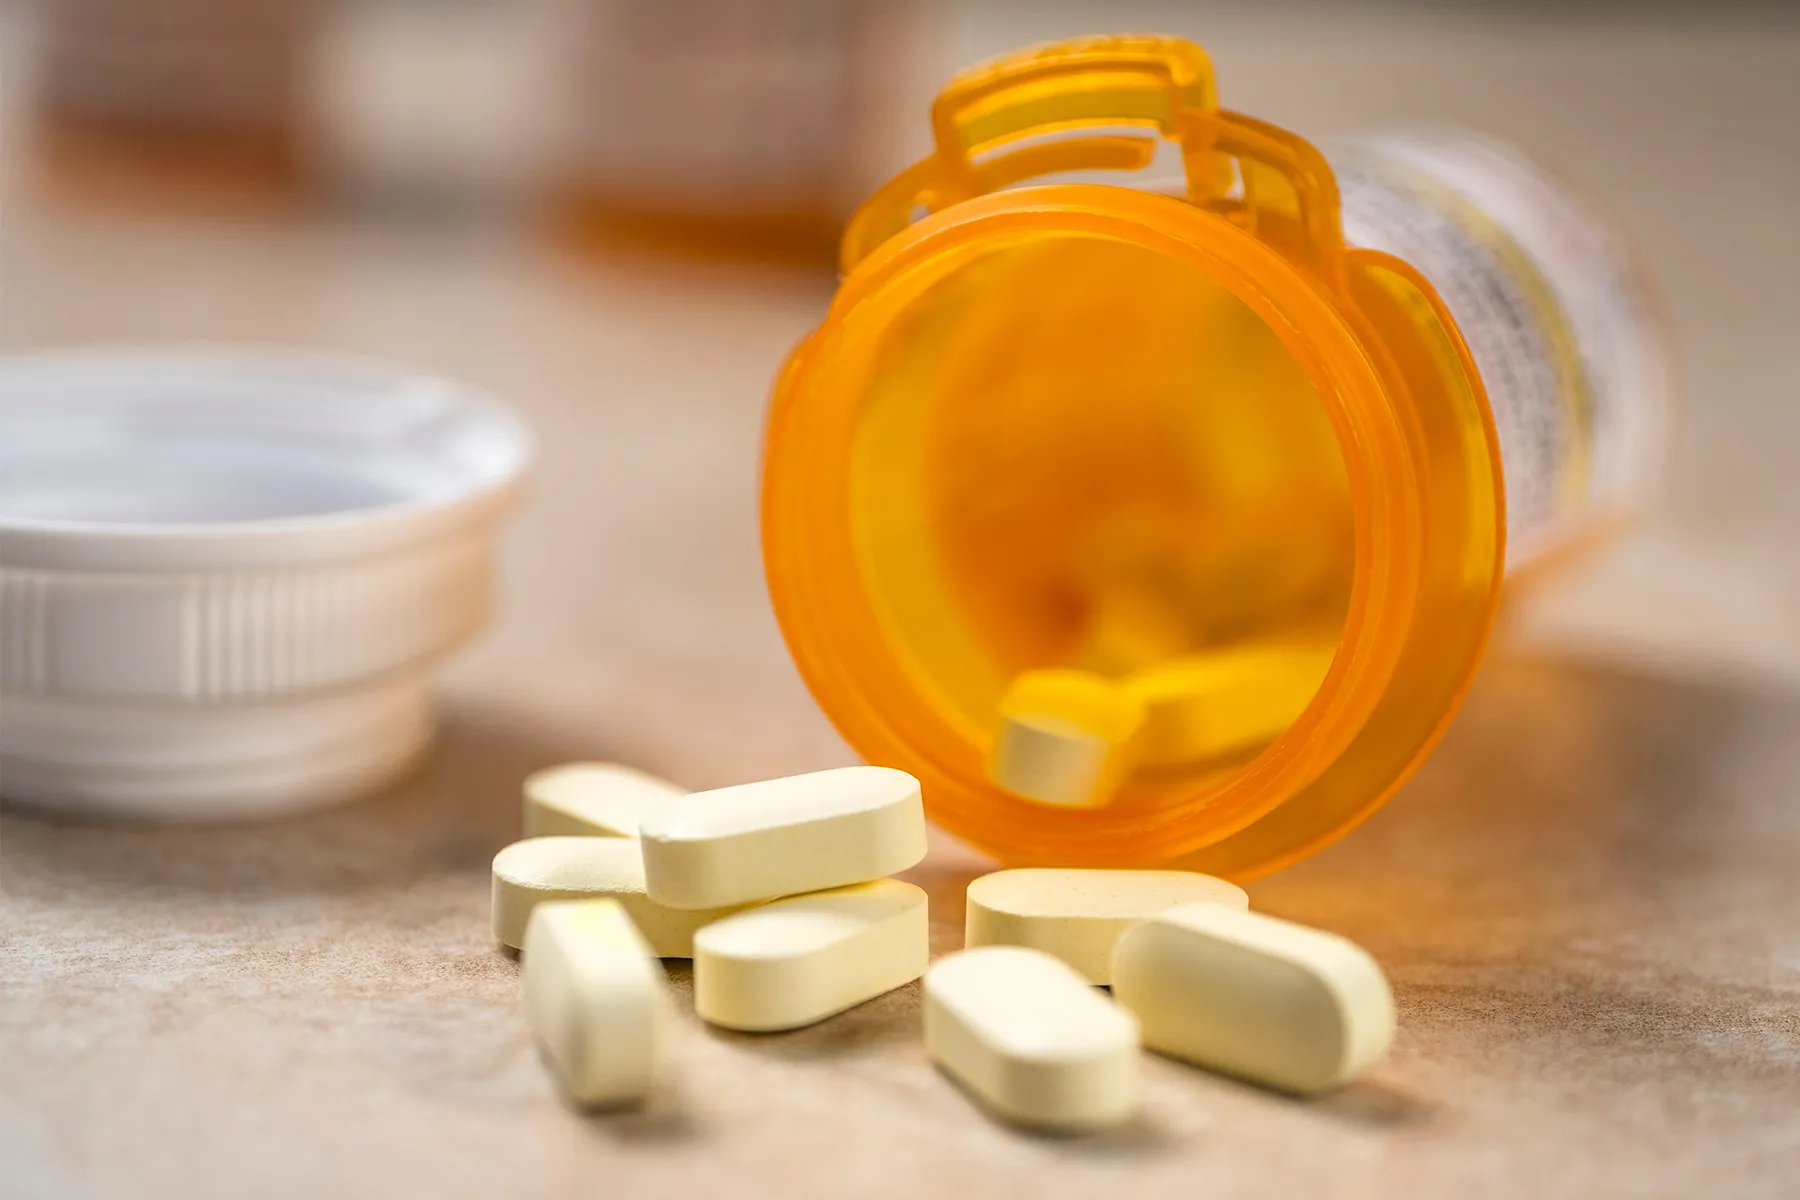 photo of prescription pills spilled from a bottle